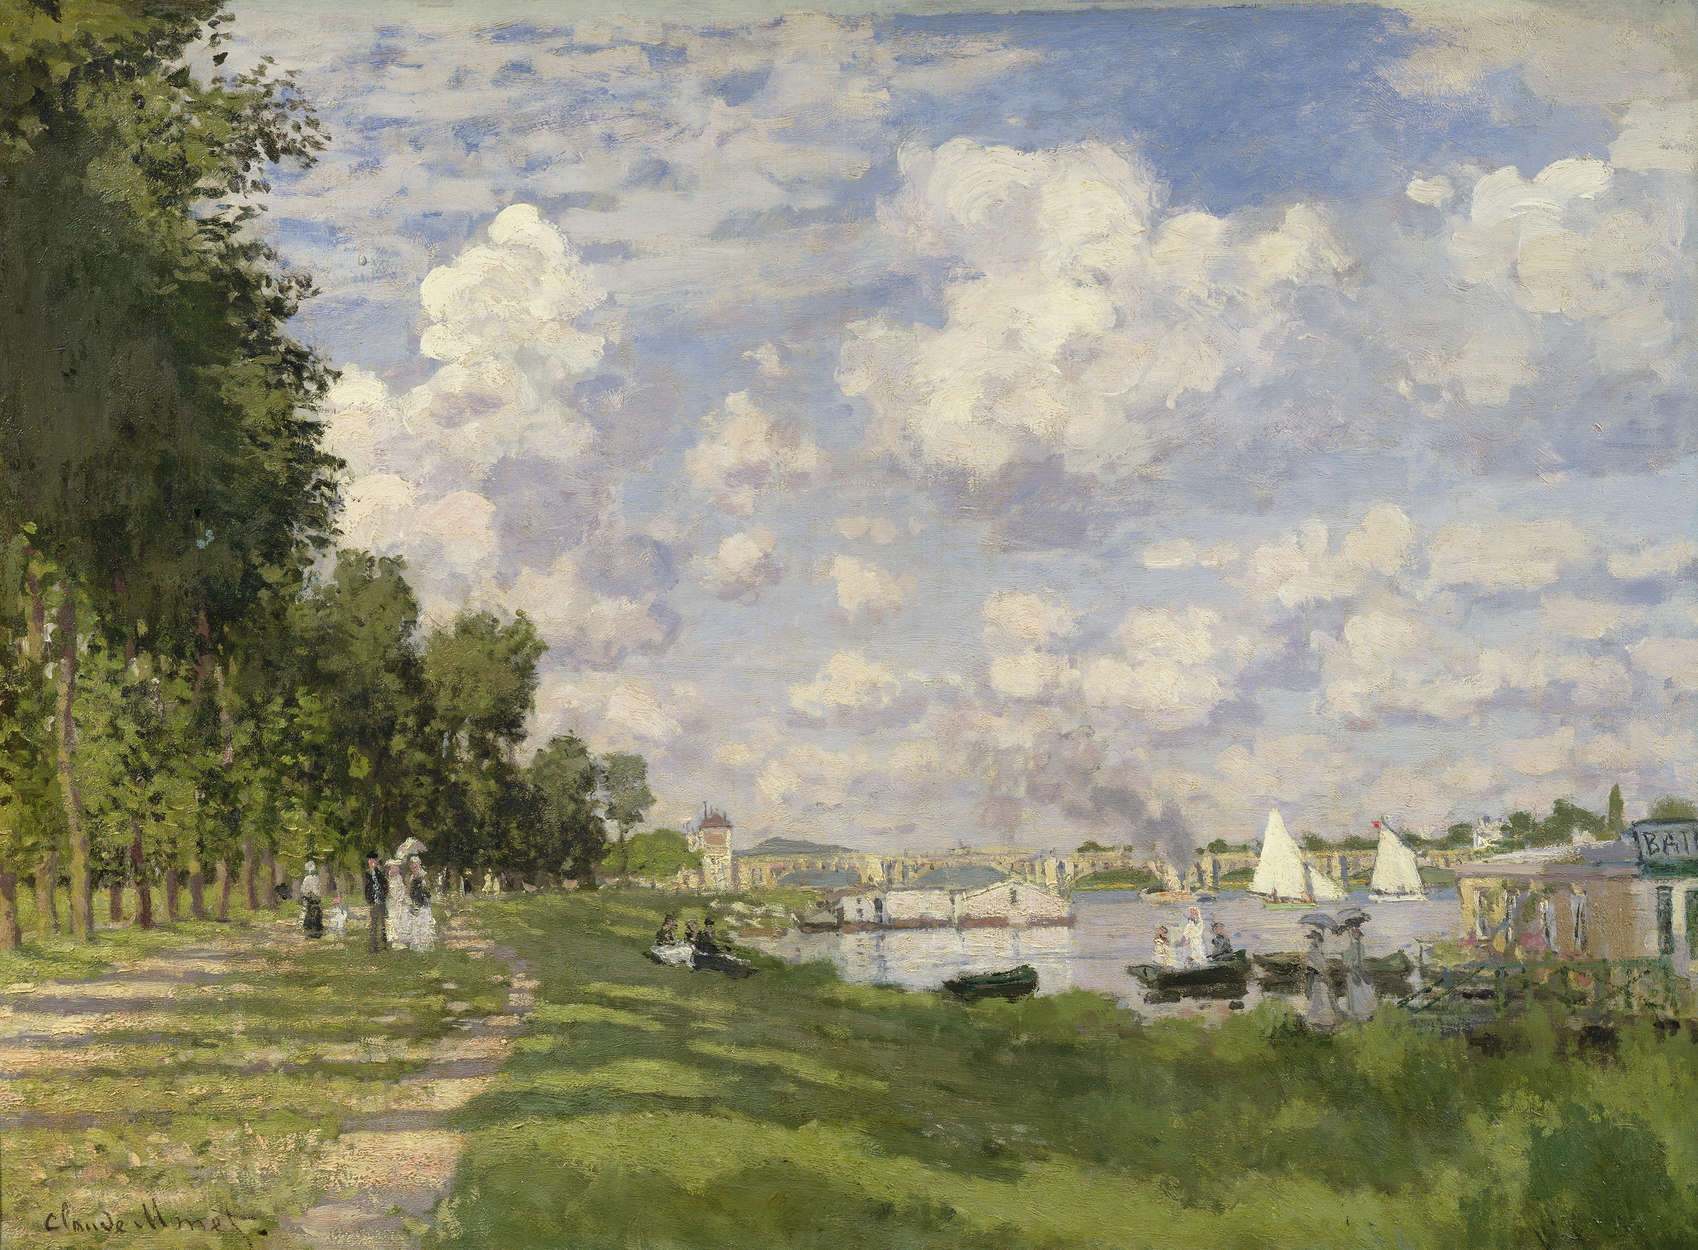             Mural "La Marina de Argenteuil" de Claude Monet
        